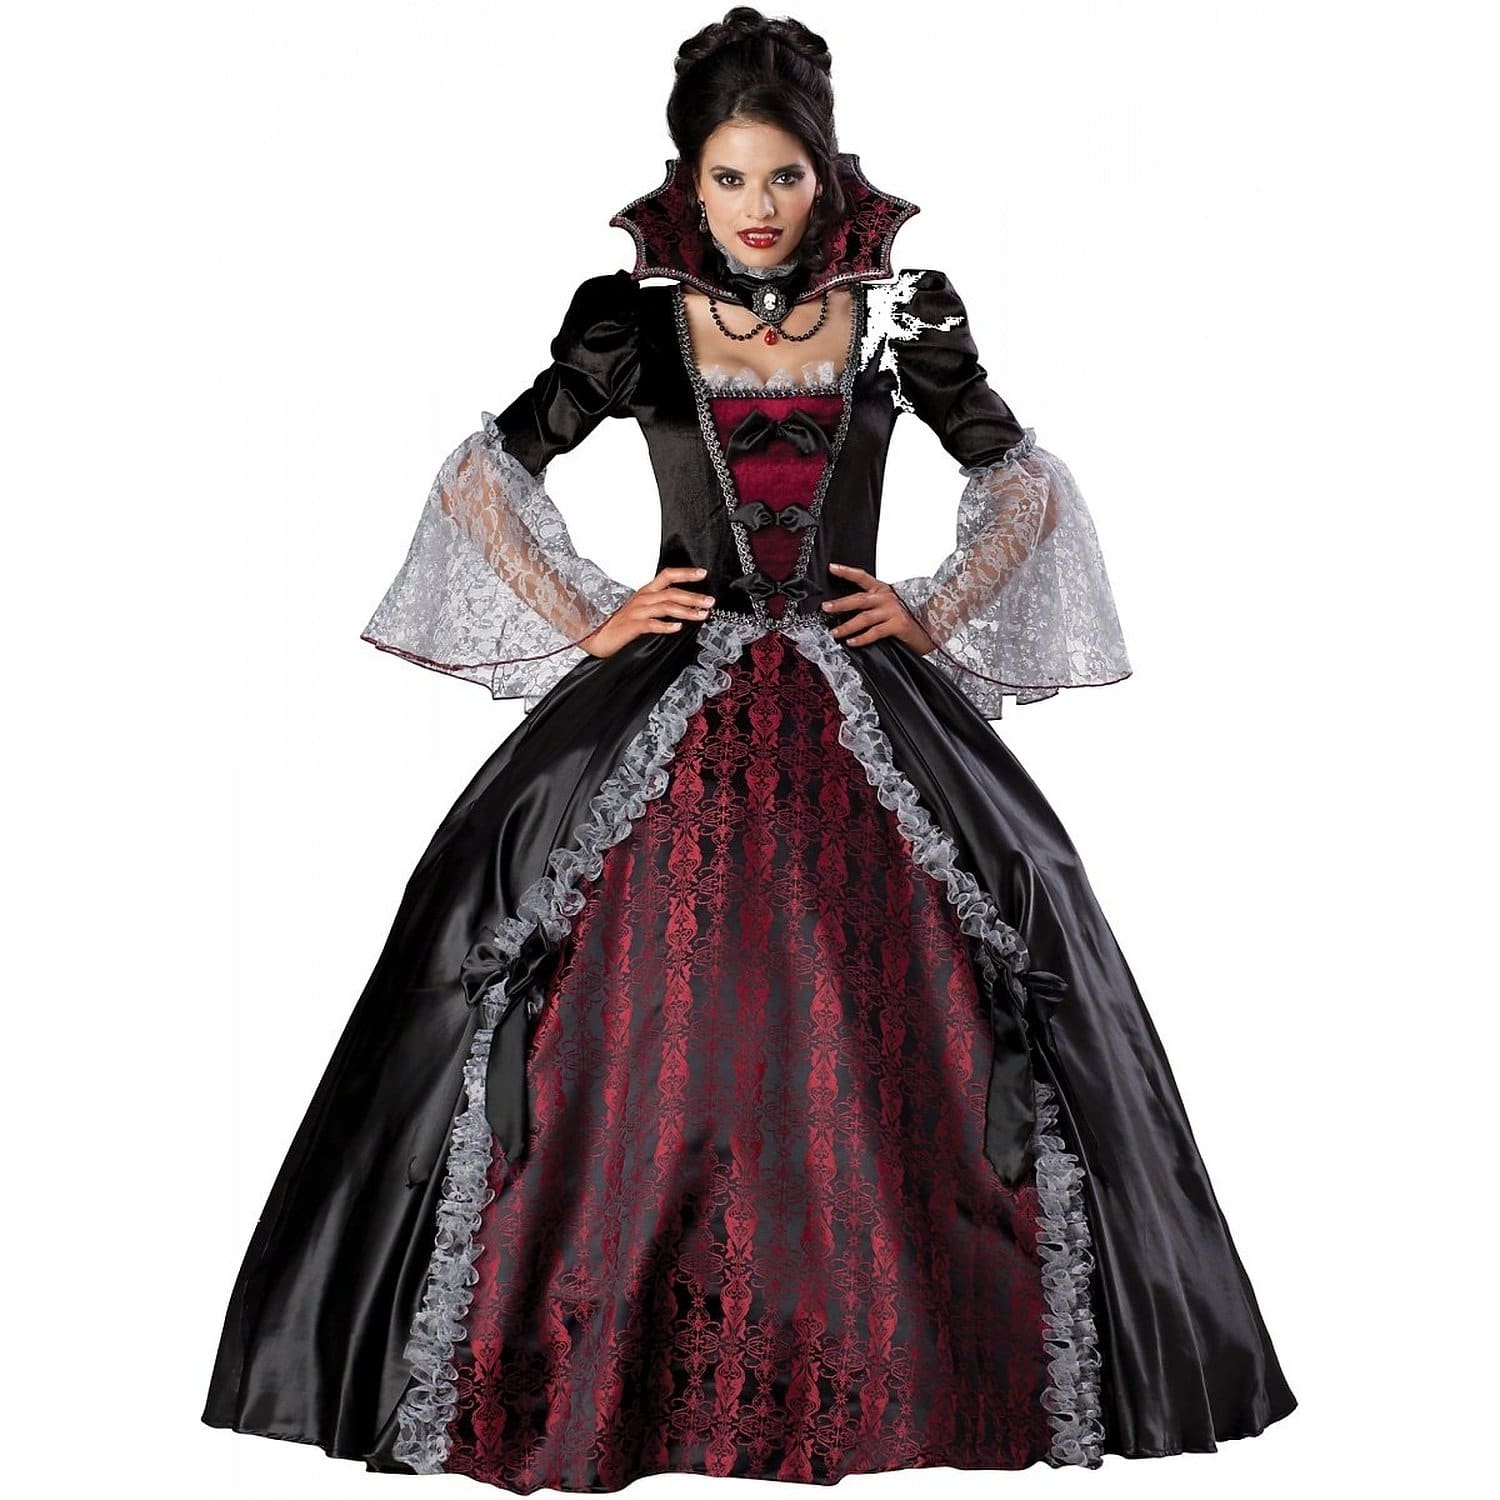 Top 5 Vampire Costumes of 2015